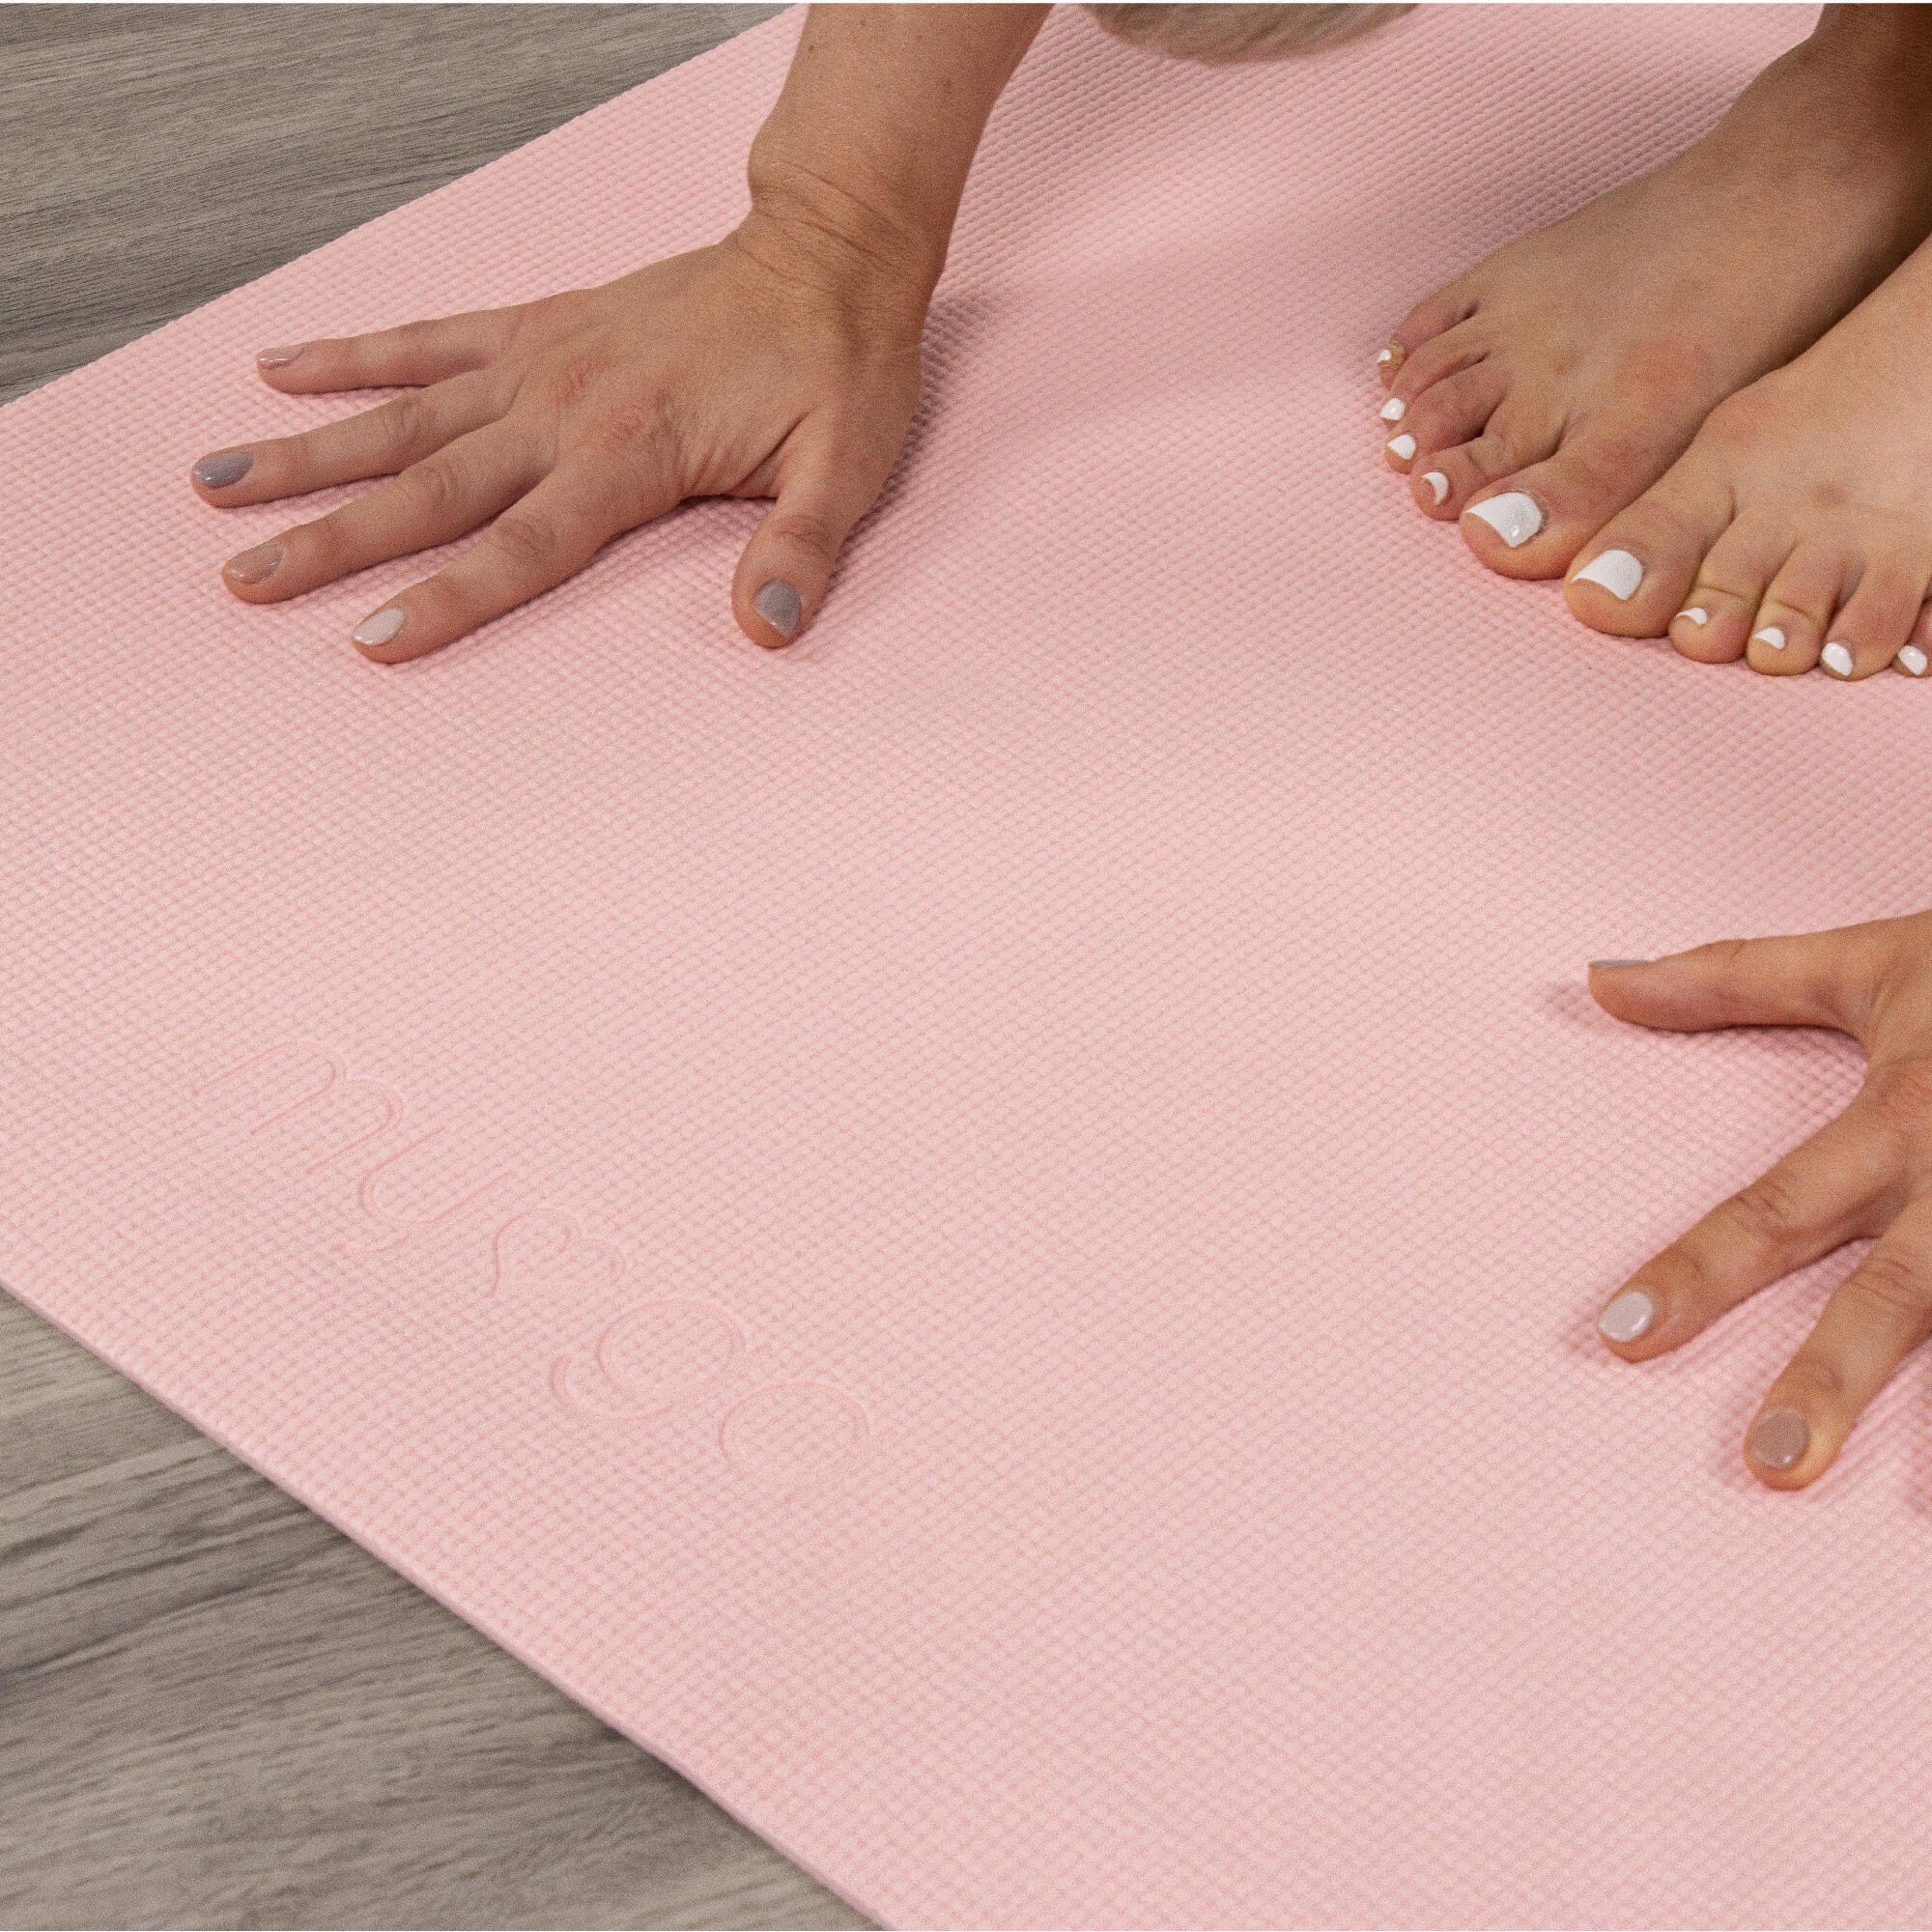 Myga Entry Level Yoga Mat - Dusty Pink 5/8